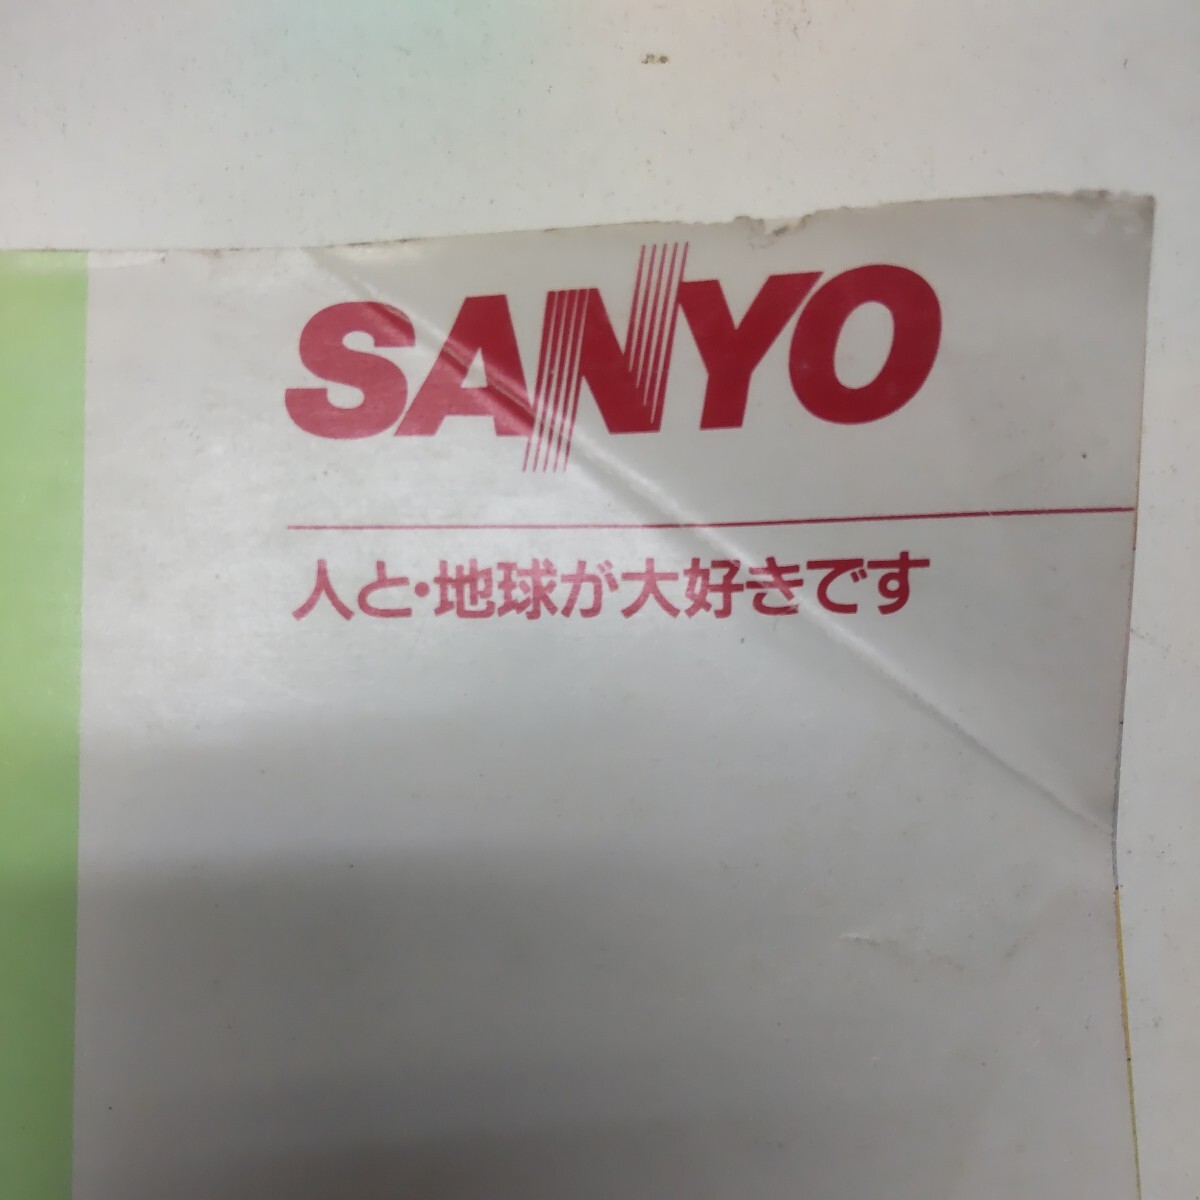  Sanyo commodity catalog 97 year spring summer number SANYO salesman catalog 